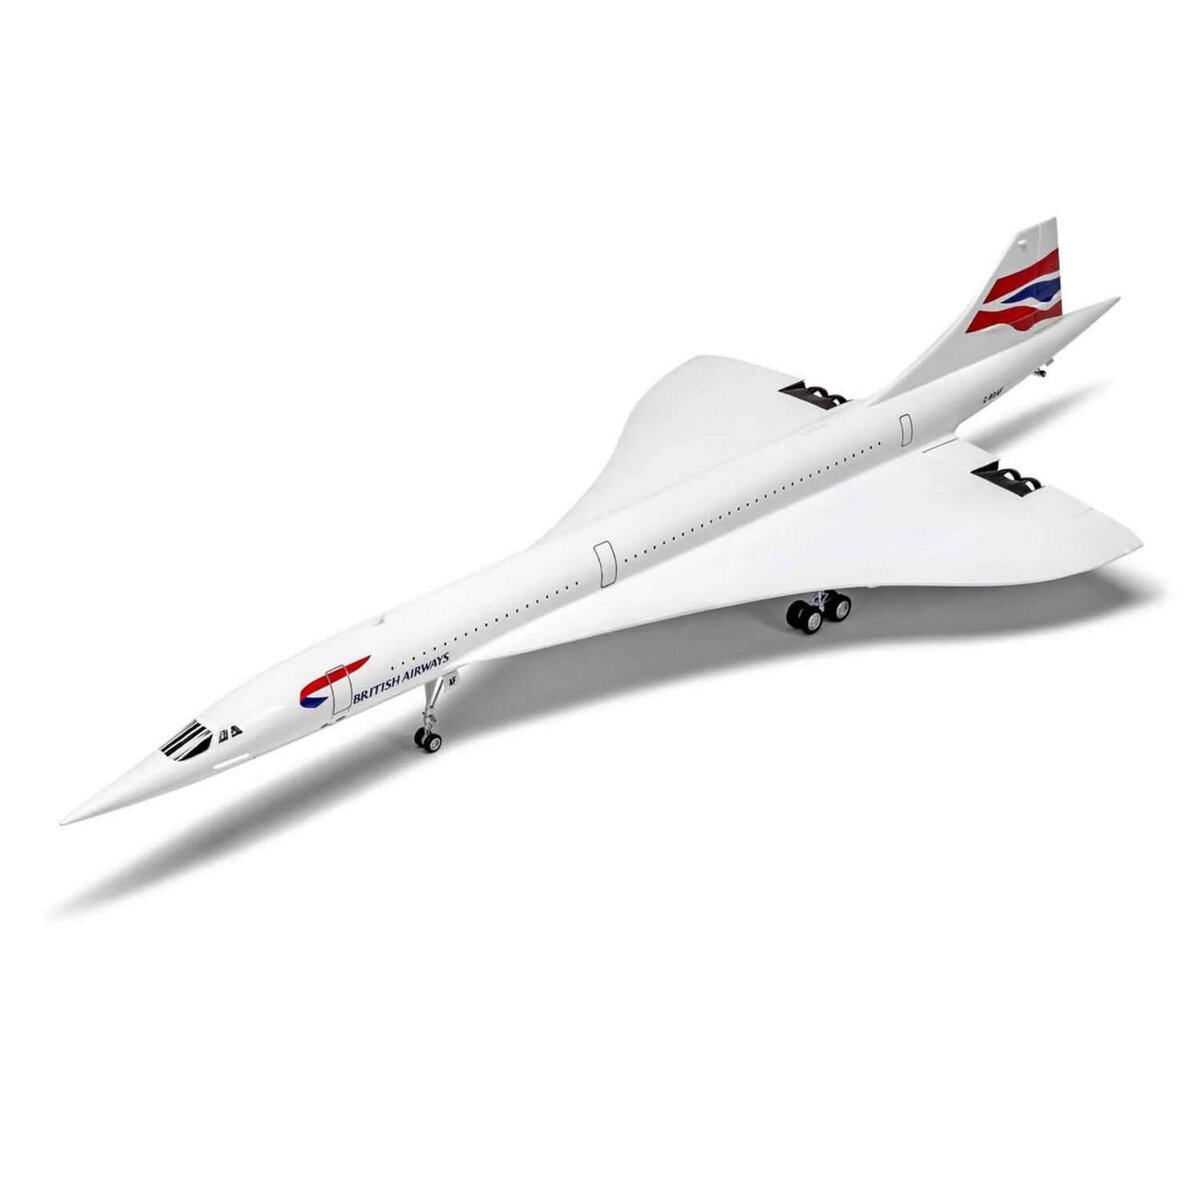 Maquette d'avion : Starter kit : Concorde AirFrance - Heller - Rue